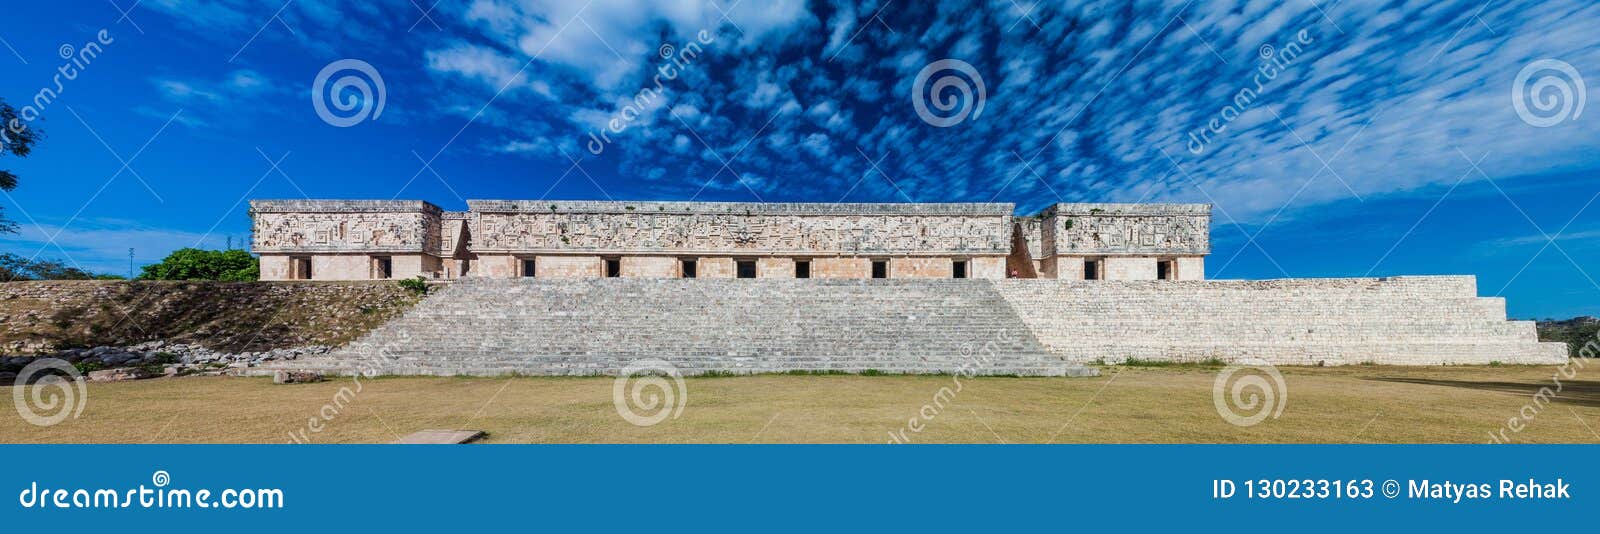 palacio del gobernador governor`s palace building in the ruins of the ancient mayan city uxmal, mexi